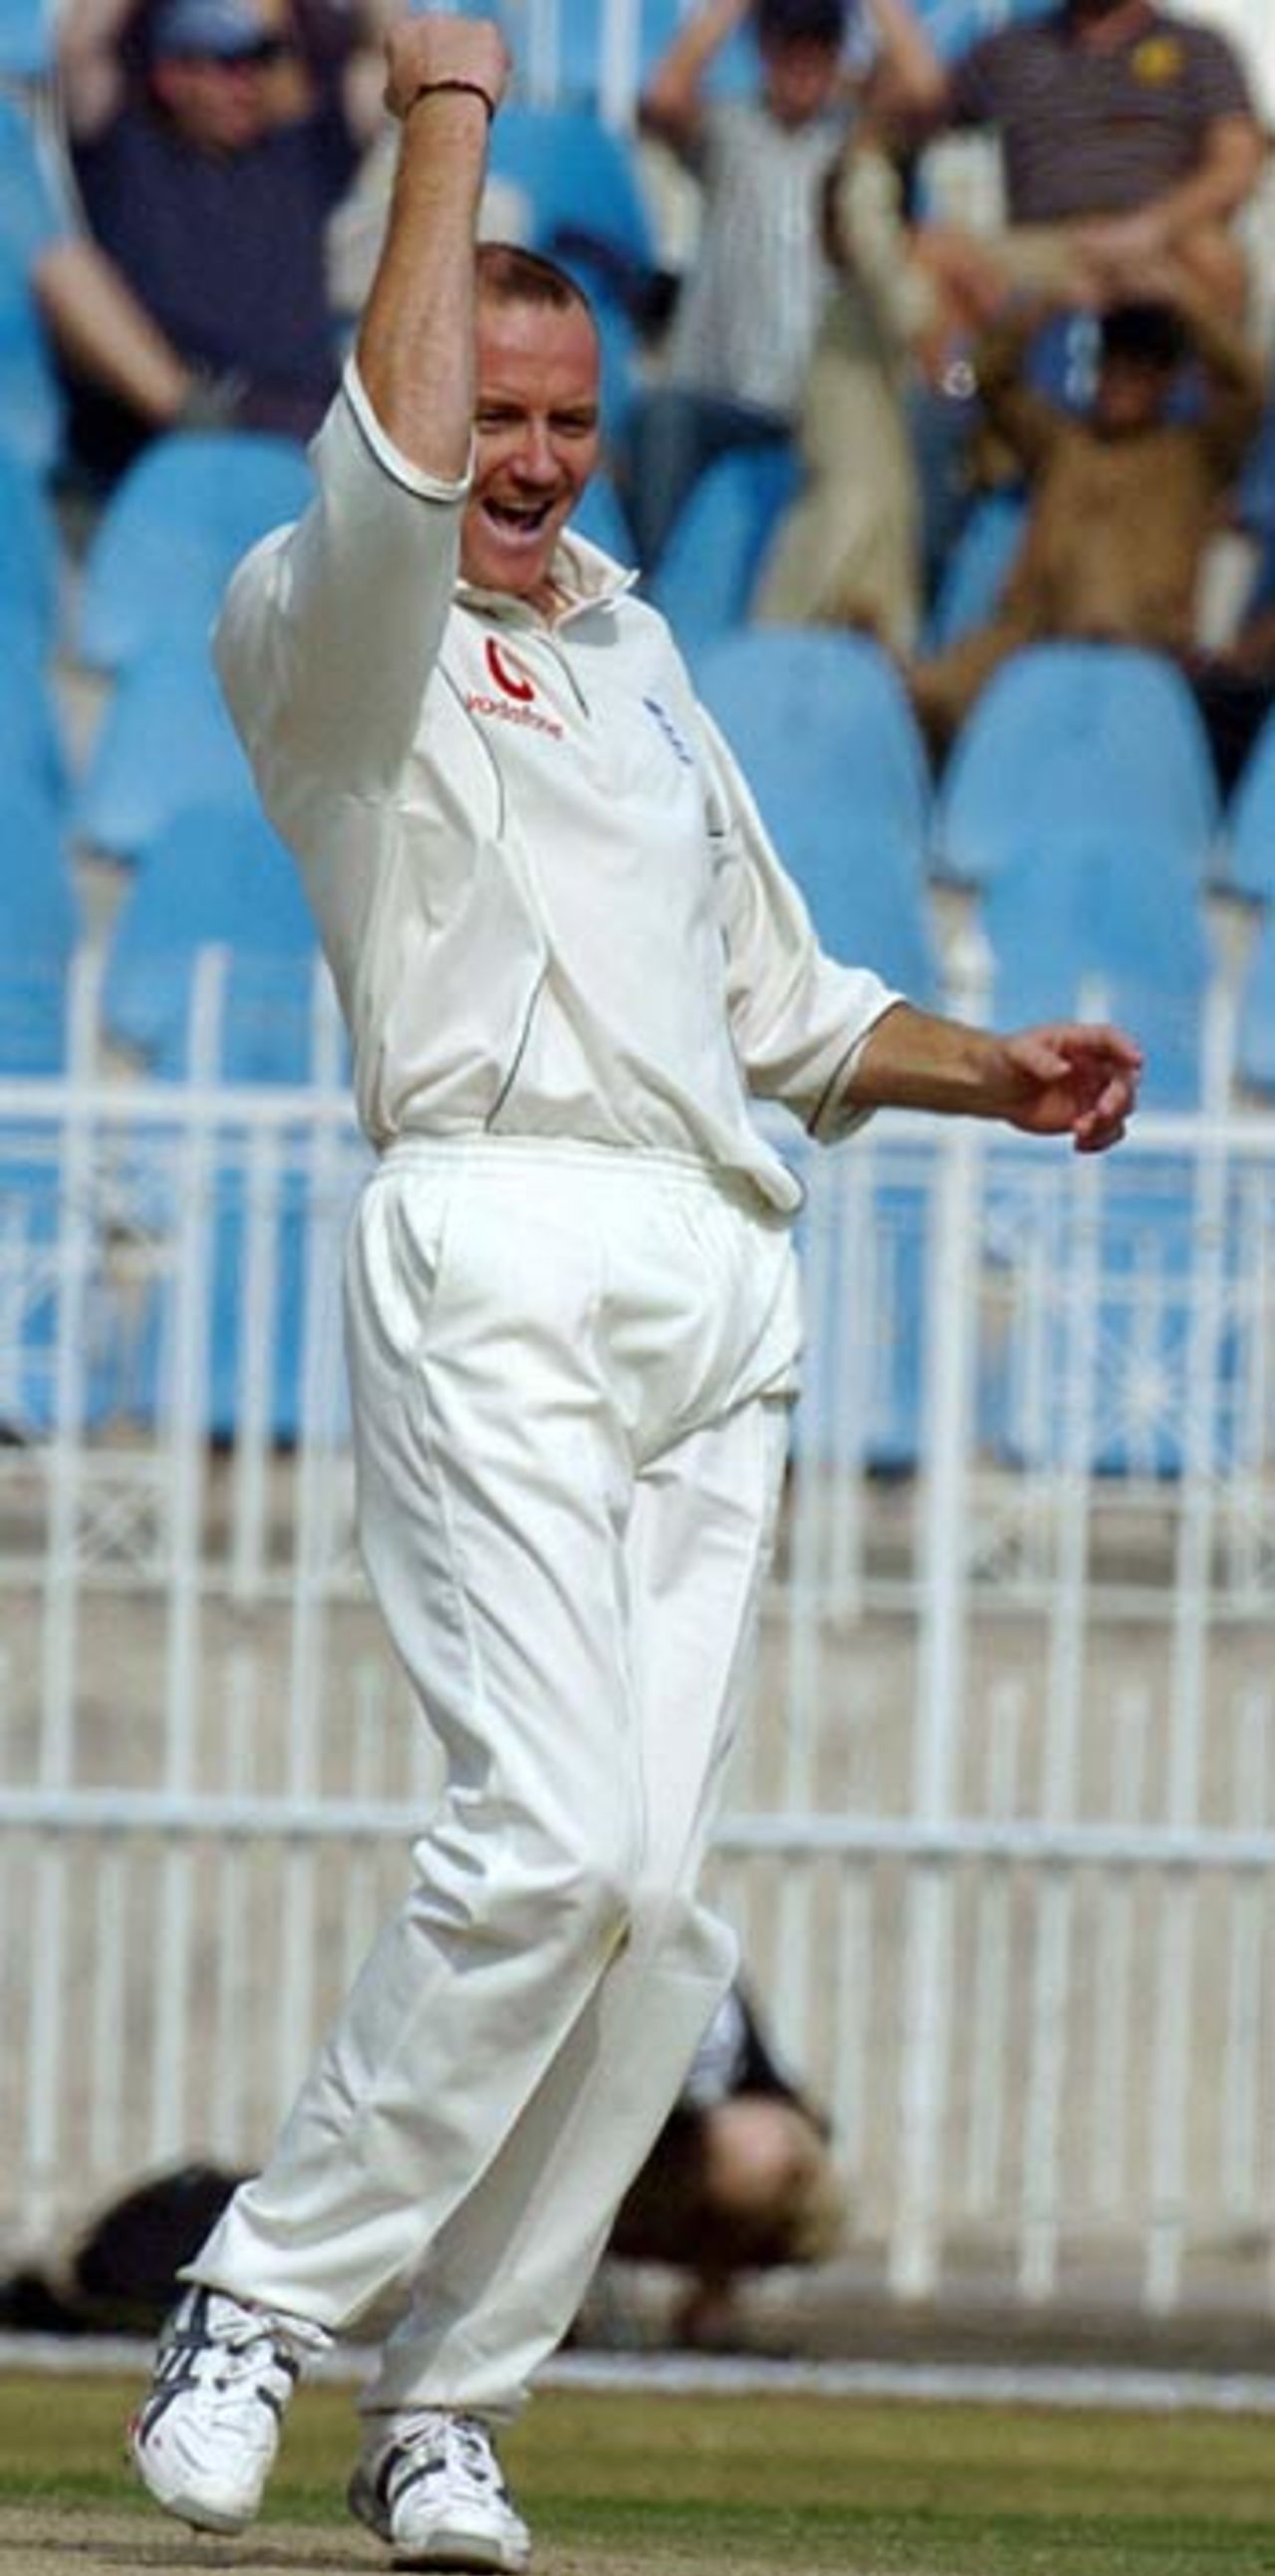 Shaun Udal grabs a wicket, Patron's XI v England XI, Rawalpindi, November 1, 2005